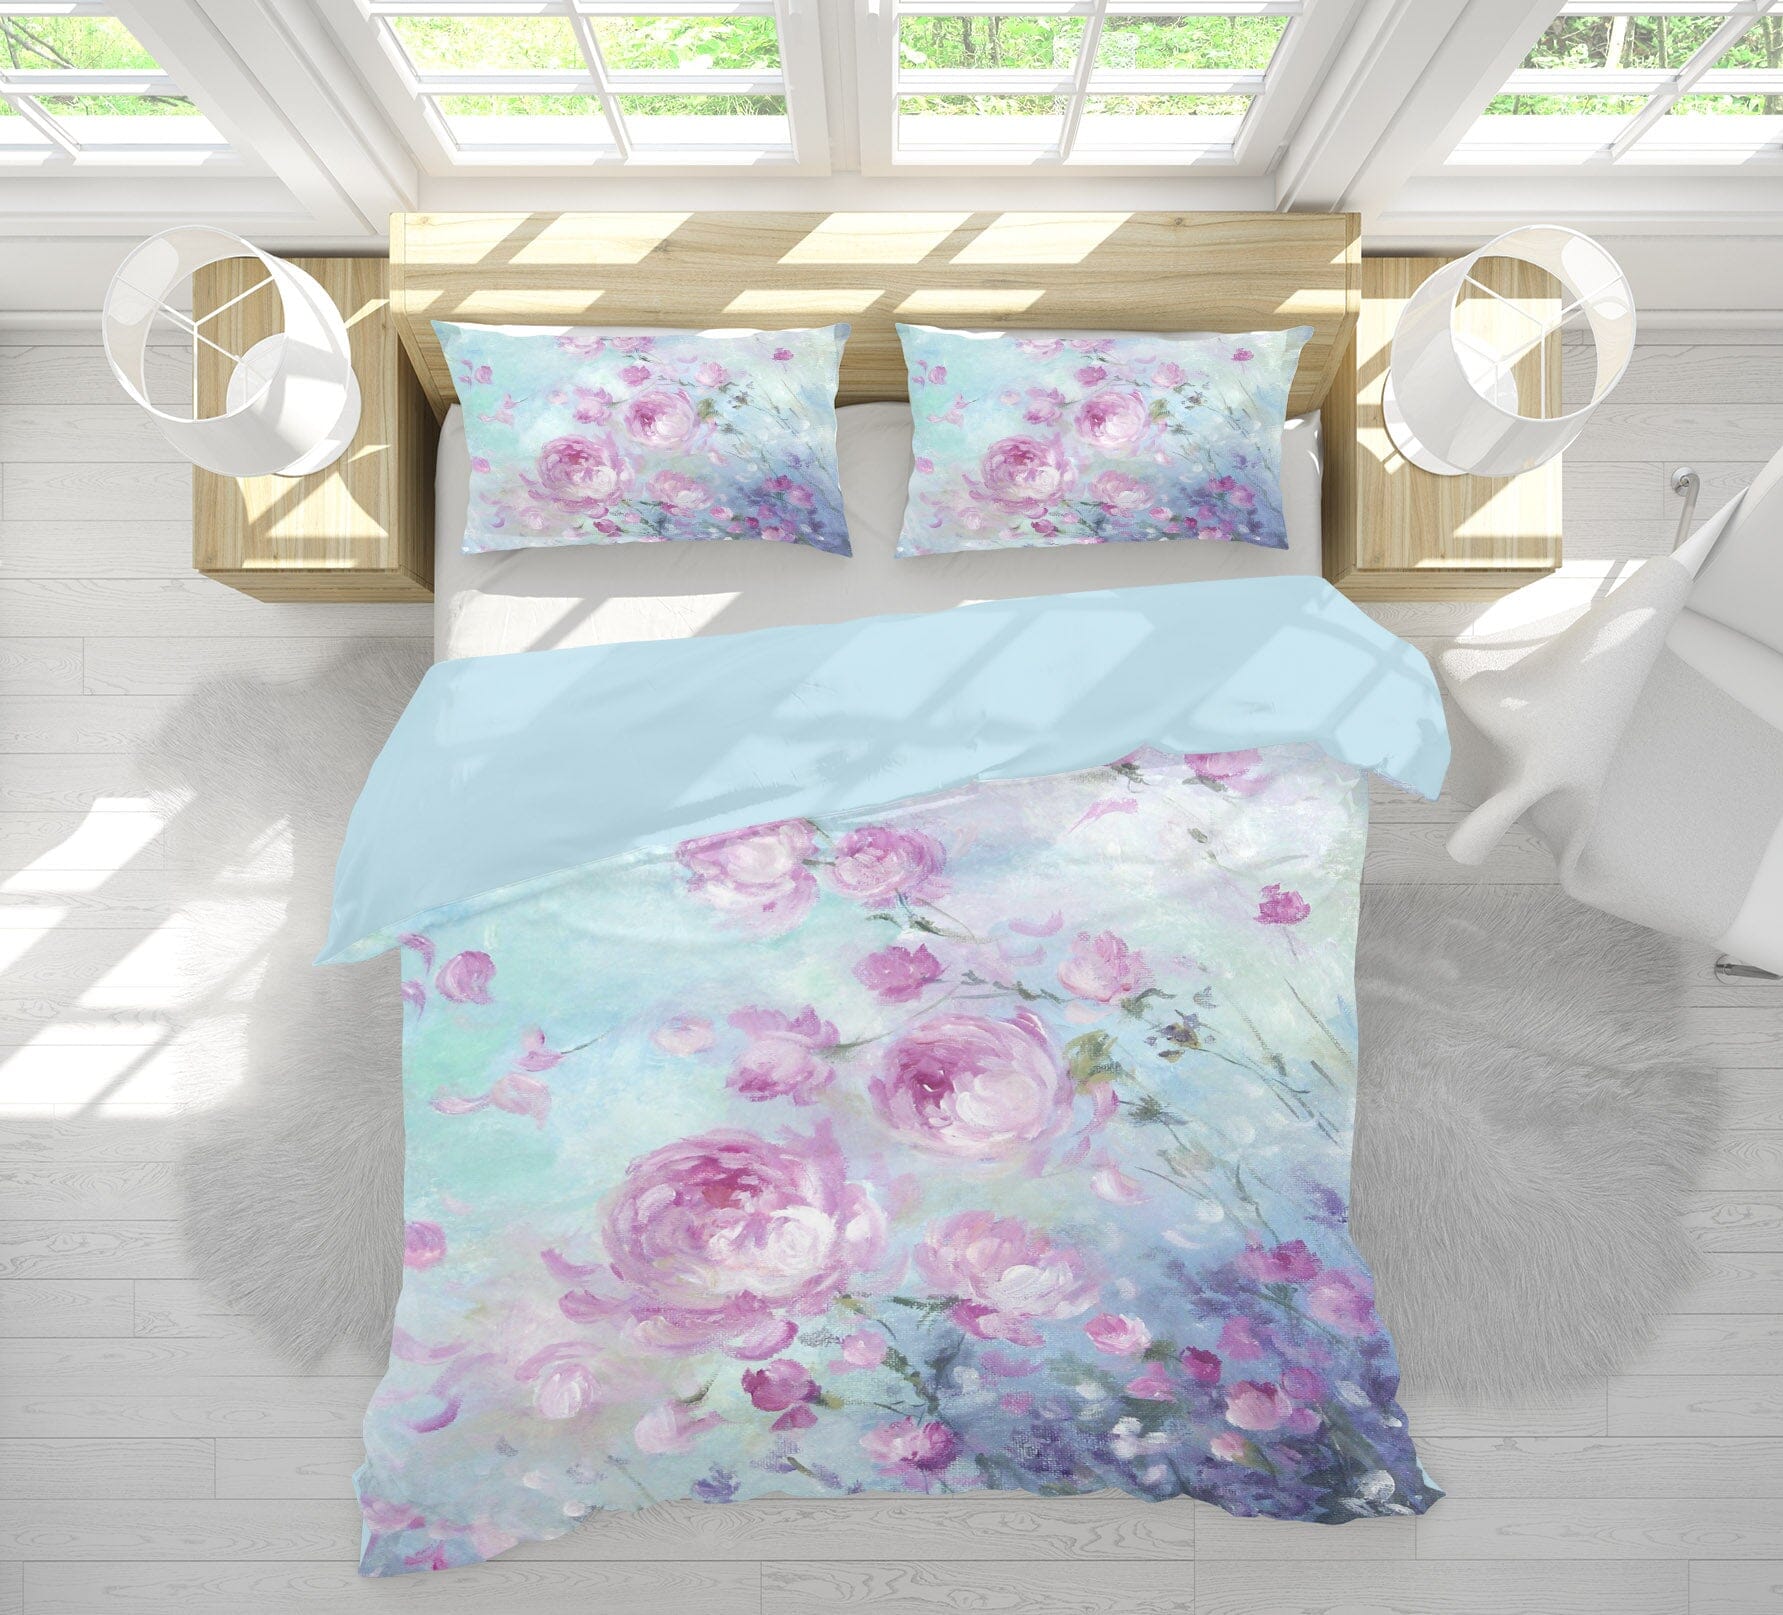 3D Purple Flowers 025 Debi Coules Bedding Bed Pillowcases Quilt Quiet Covers AJ Creativity Home 